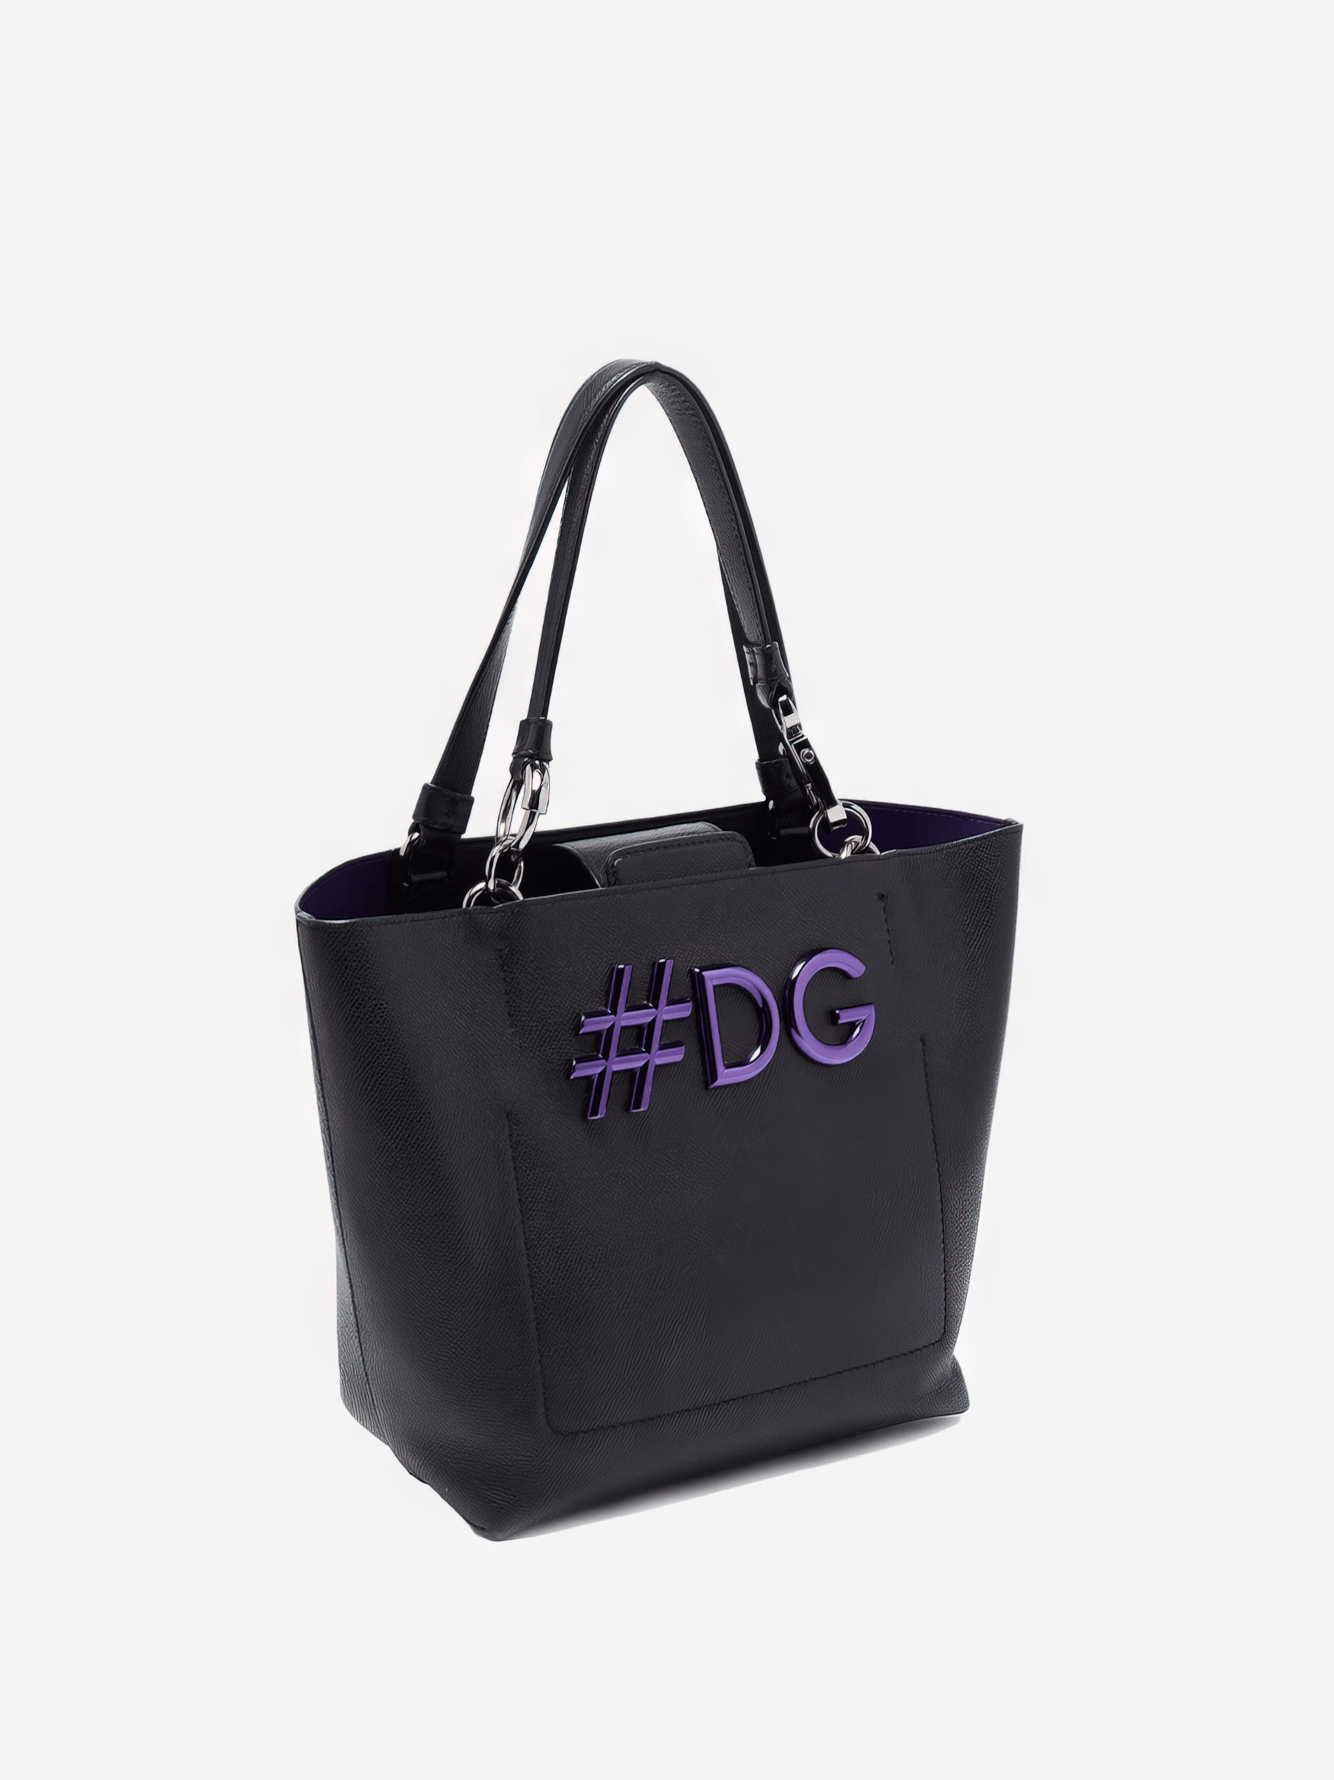 Dolce & Gabbana Beatrice #DG Shopping Tote